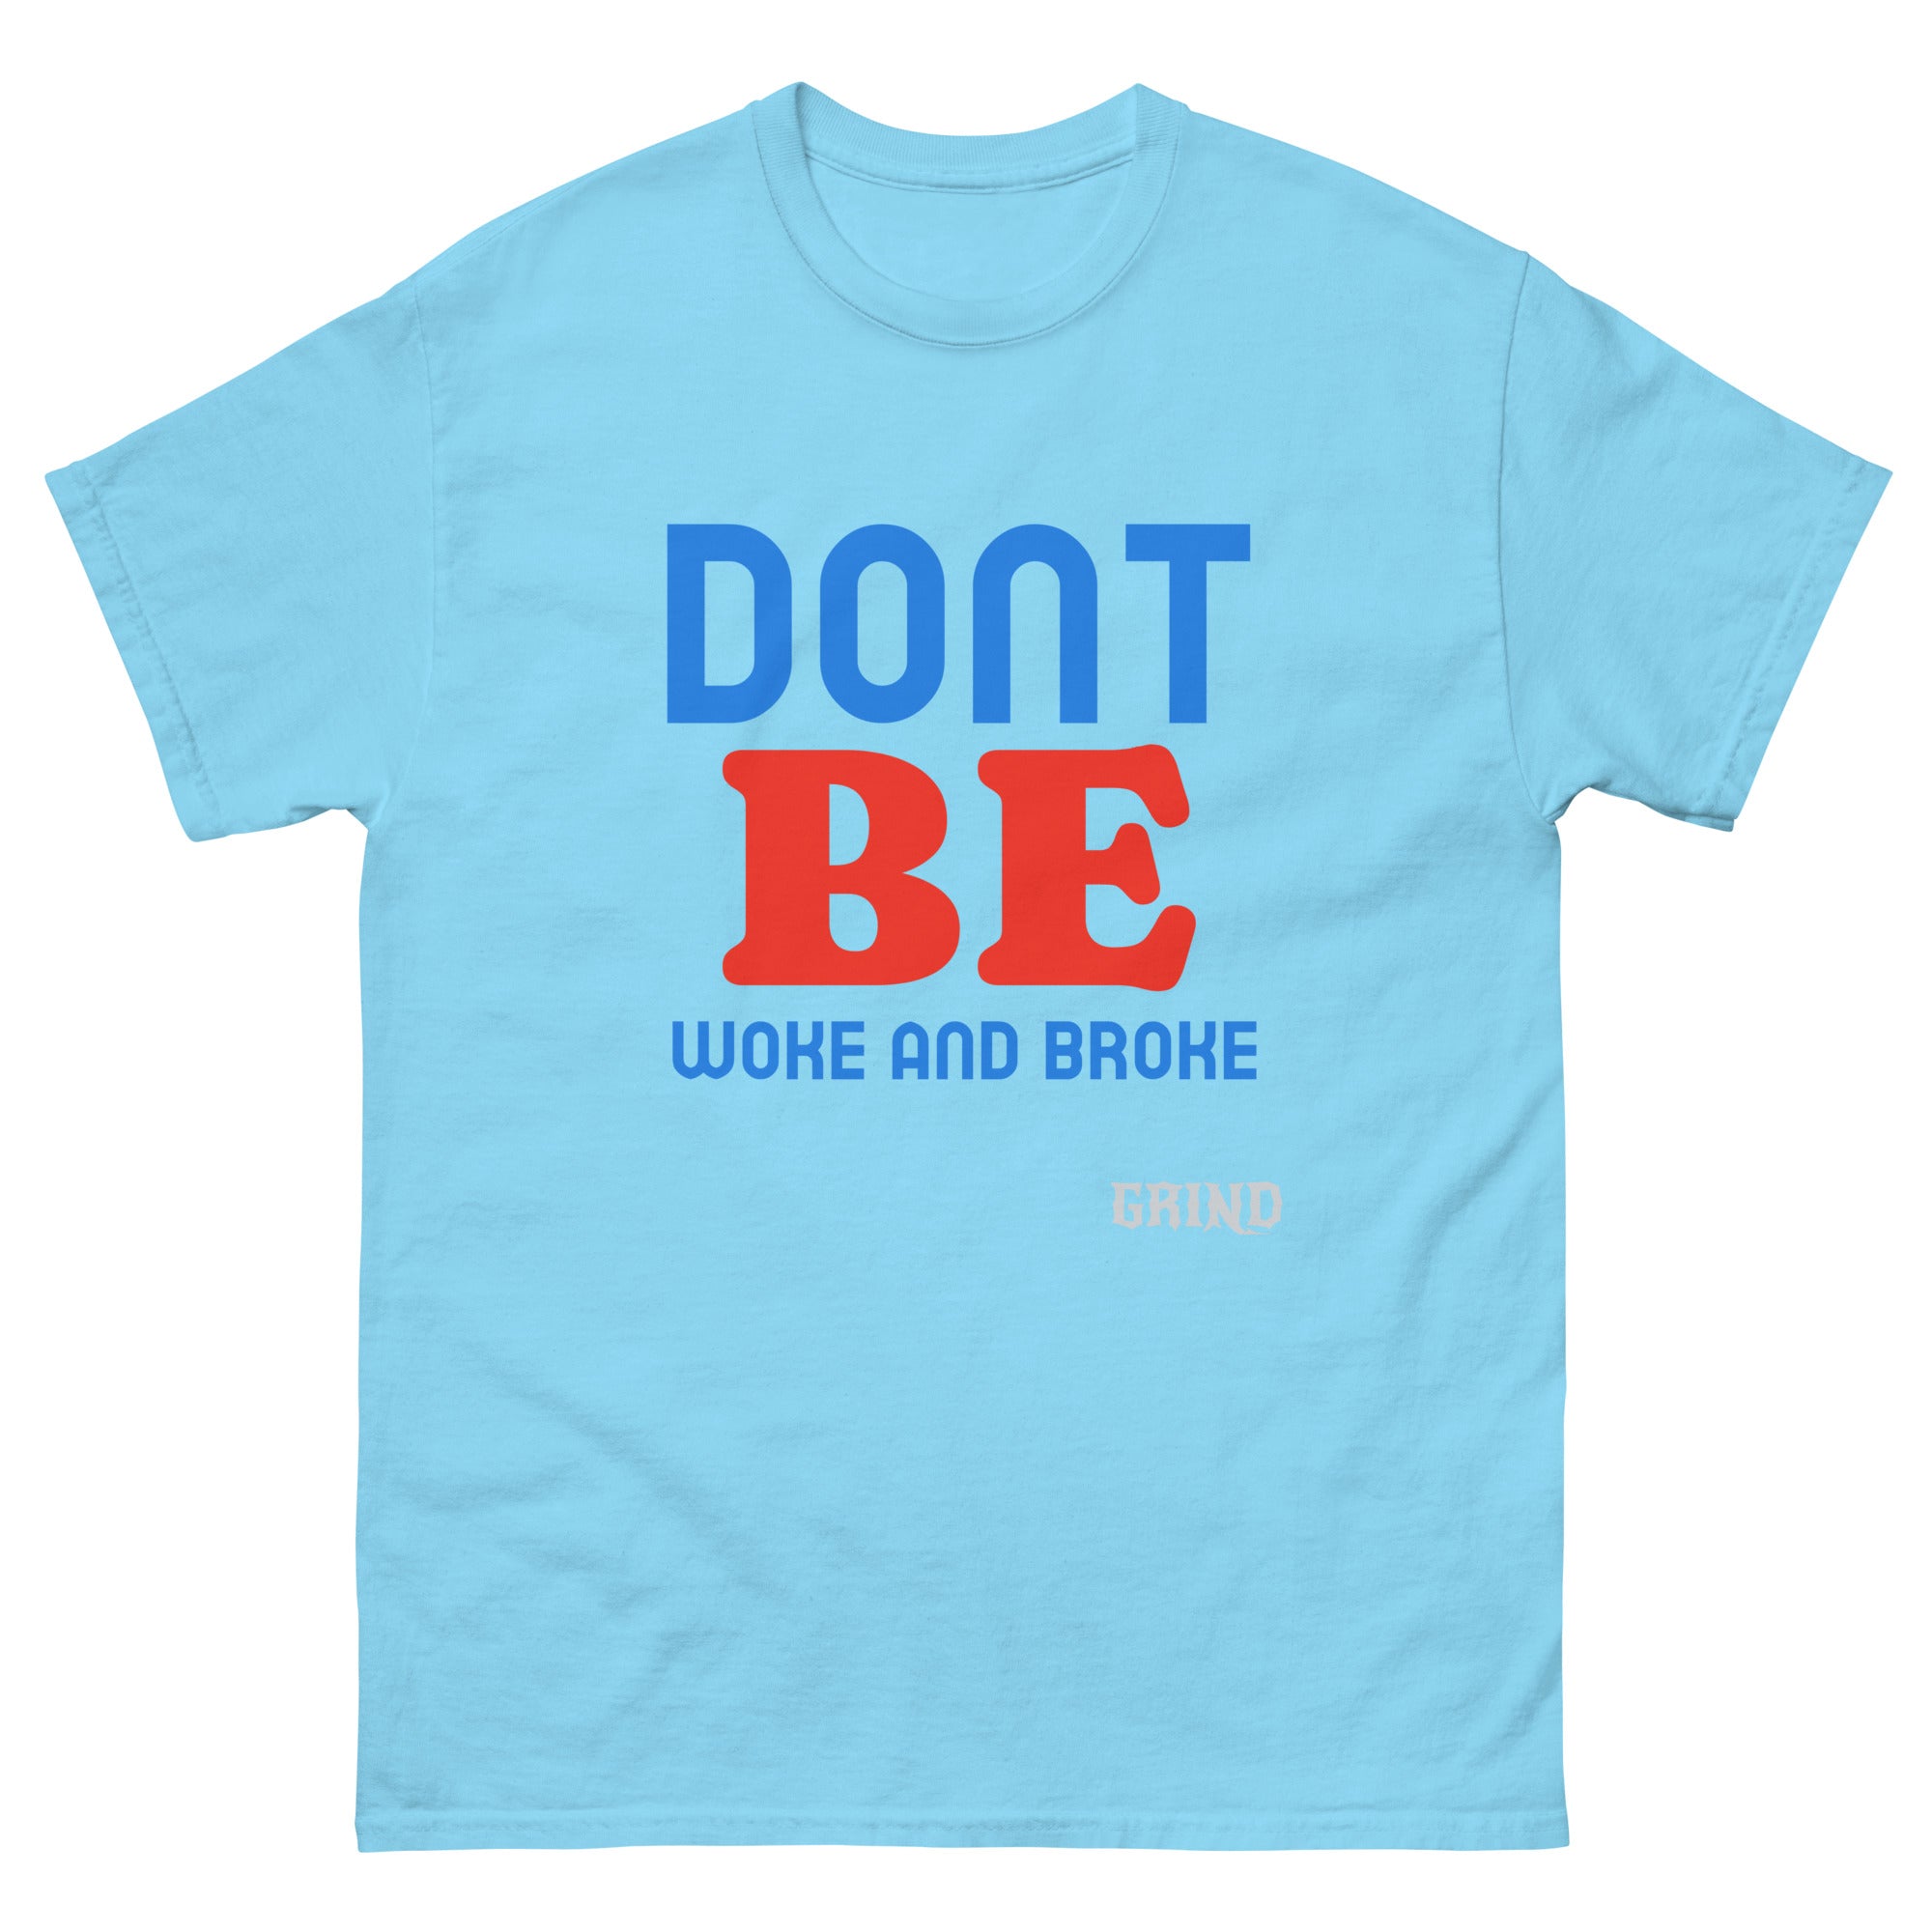 Men's GRIND "Don't Be Woke and Broke" classic T-shirt